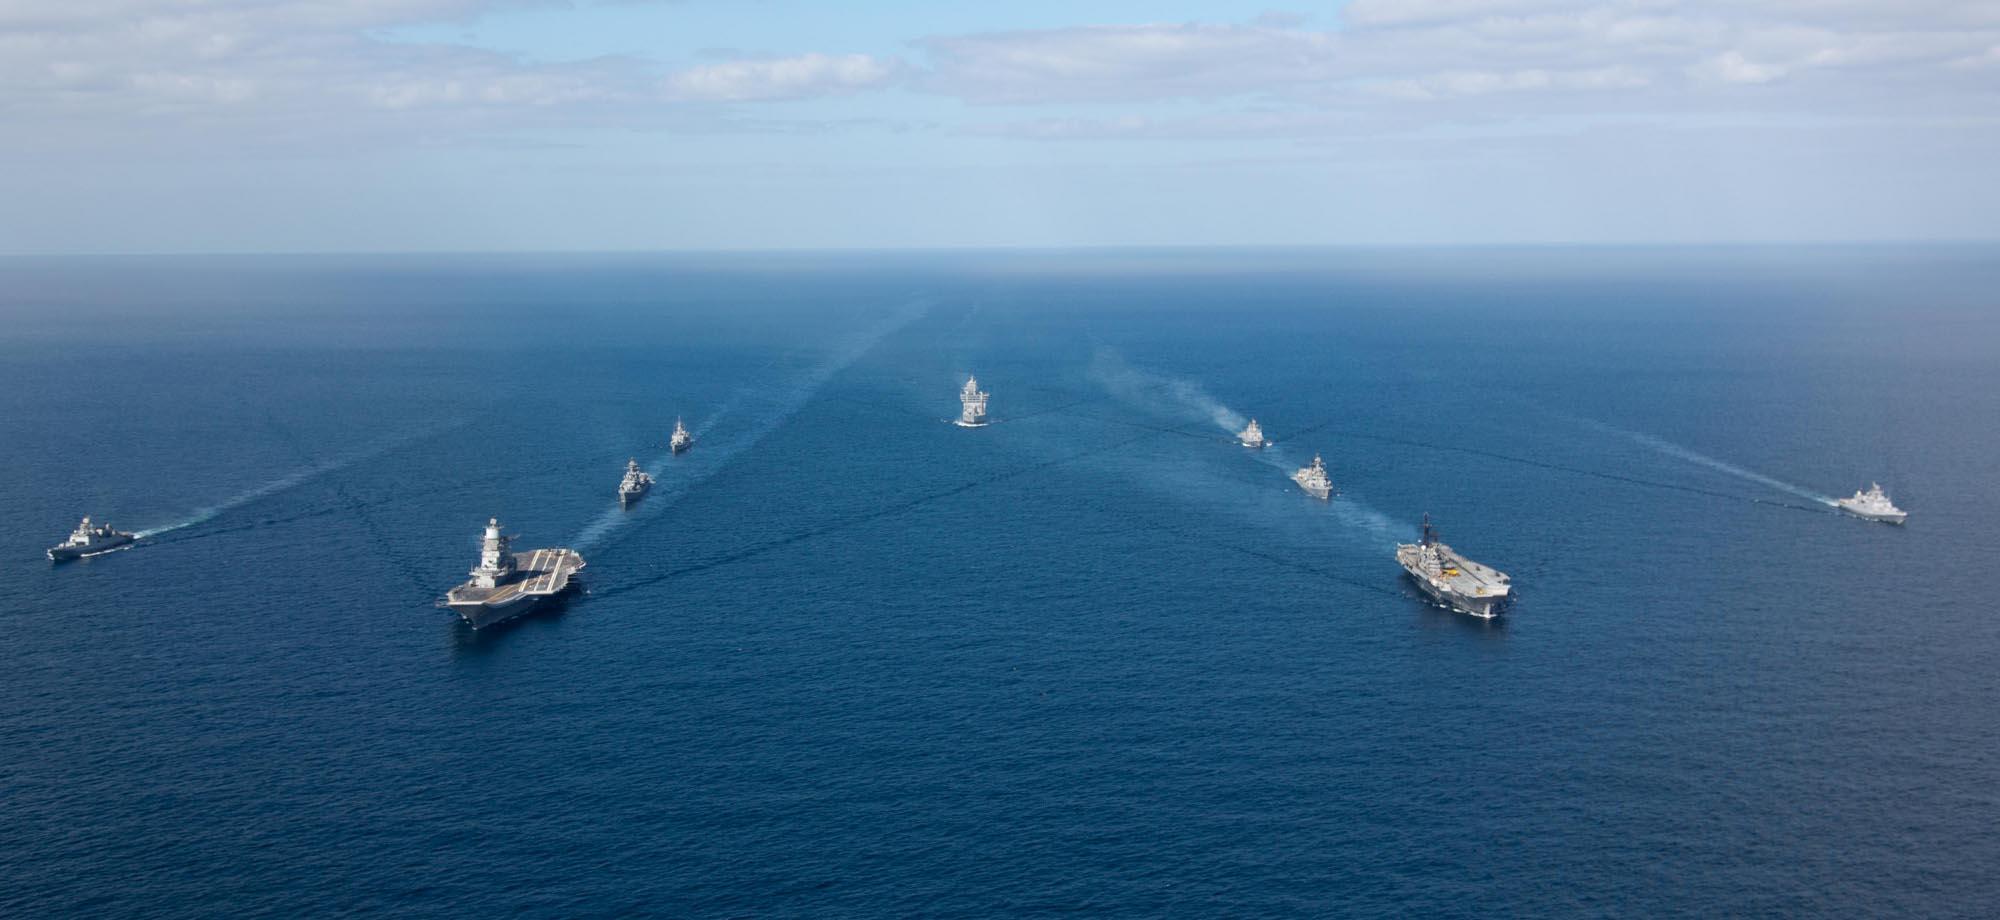 Indian Navy flotilla escorting aircraft carrier